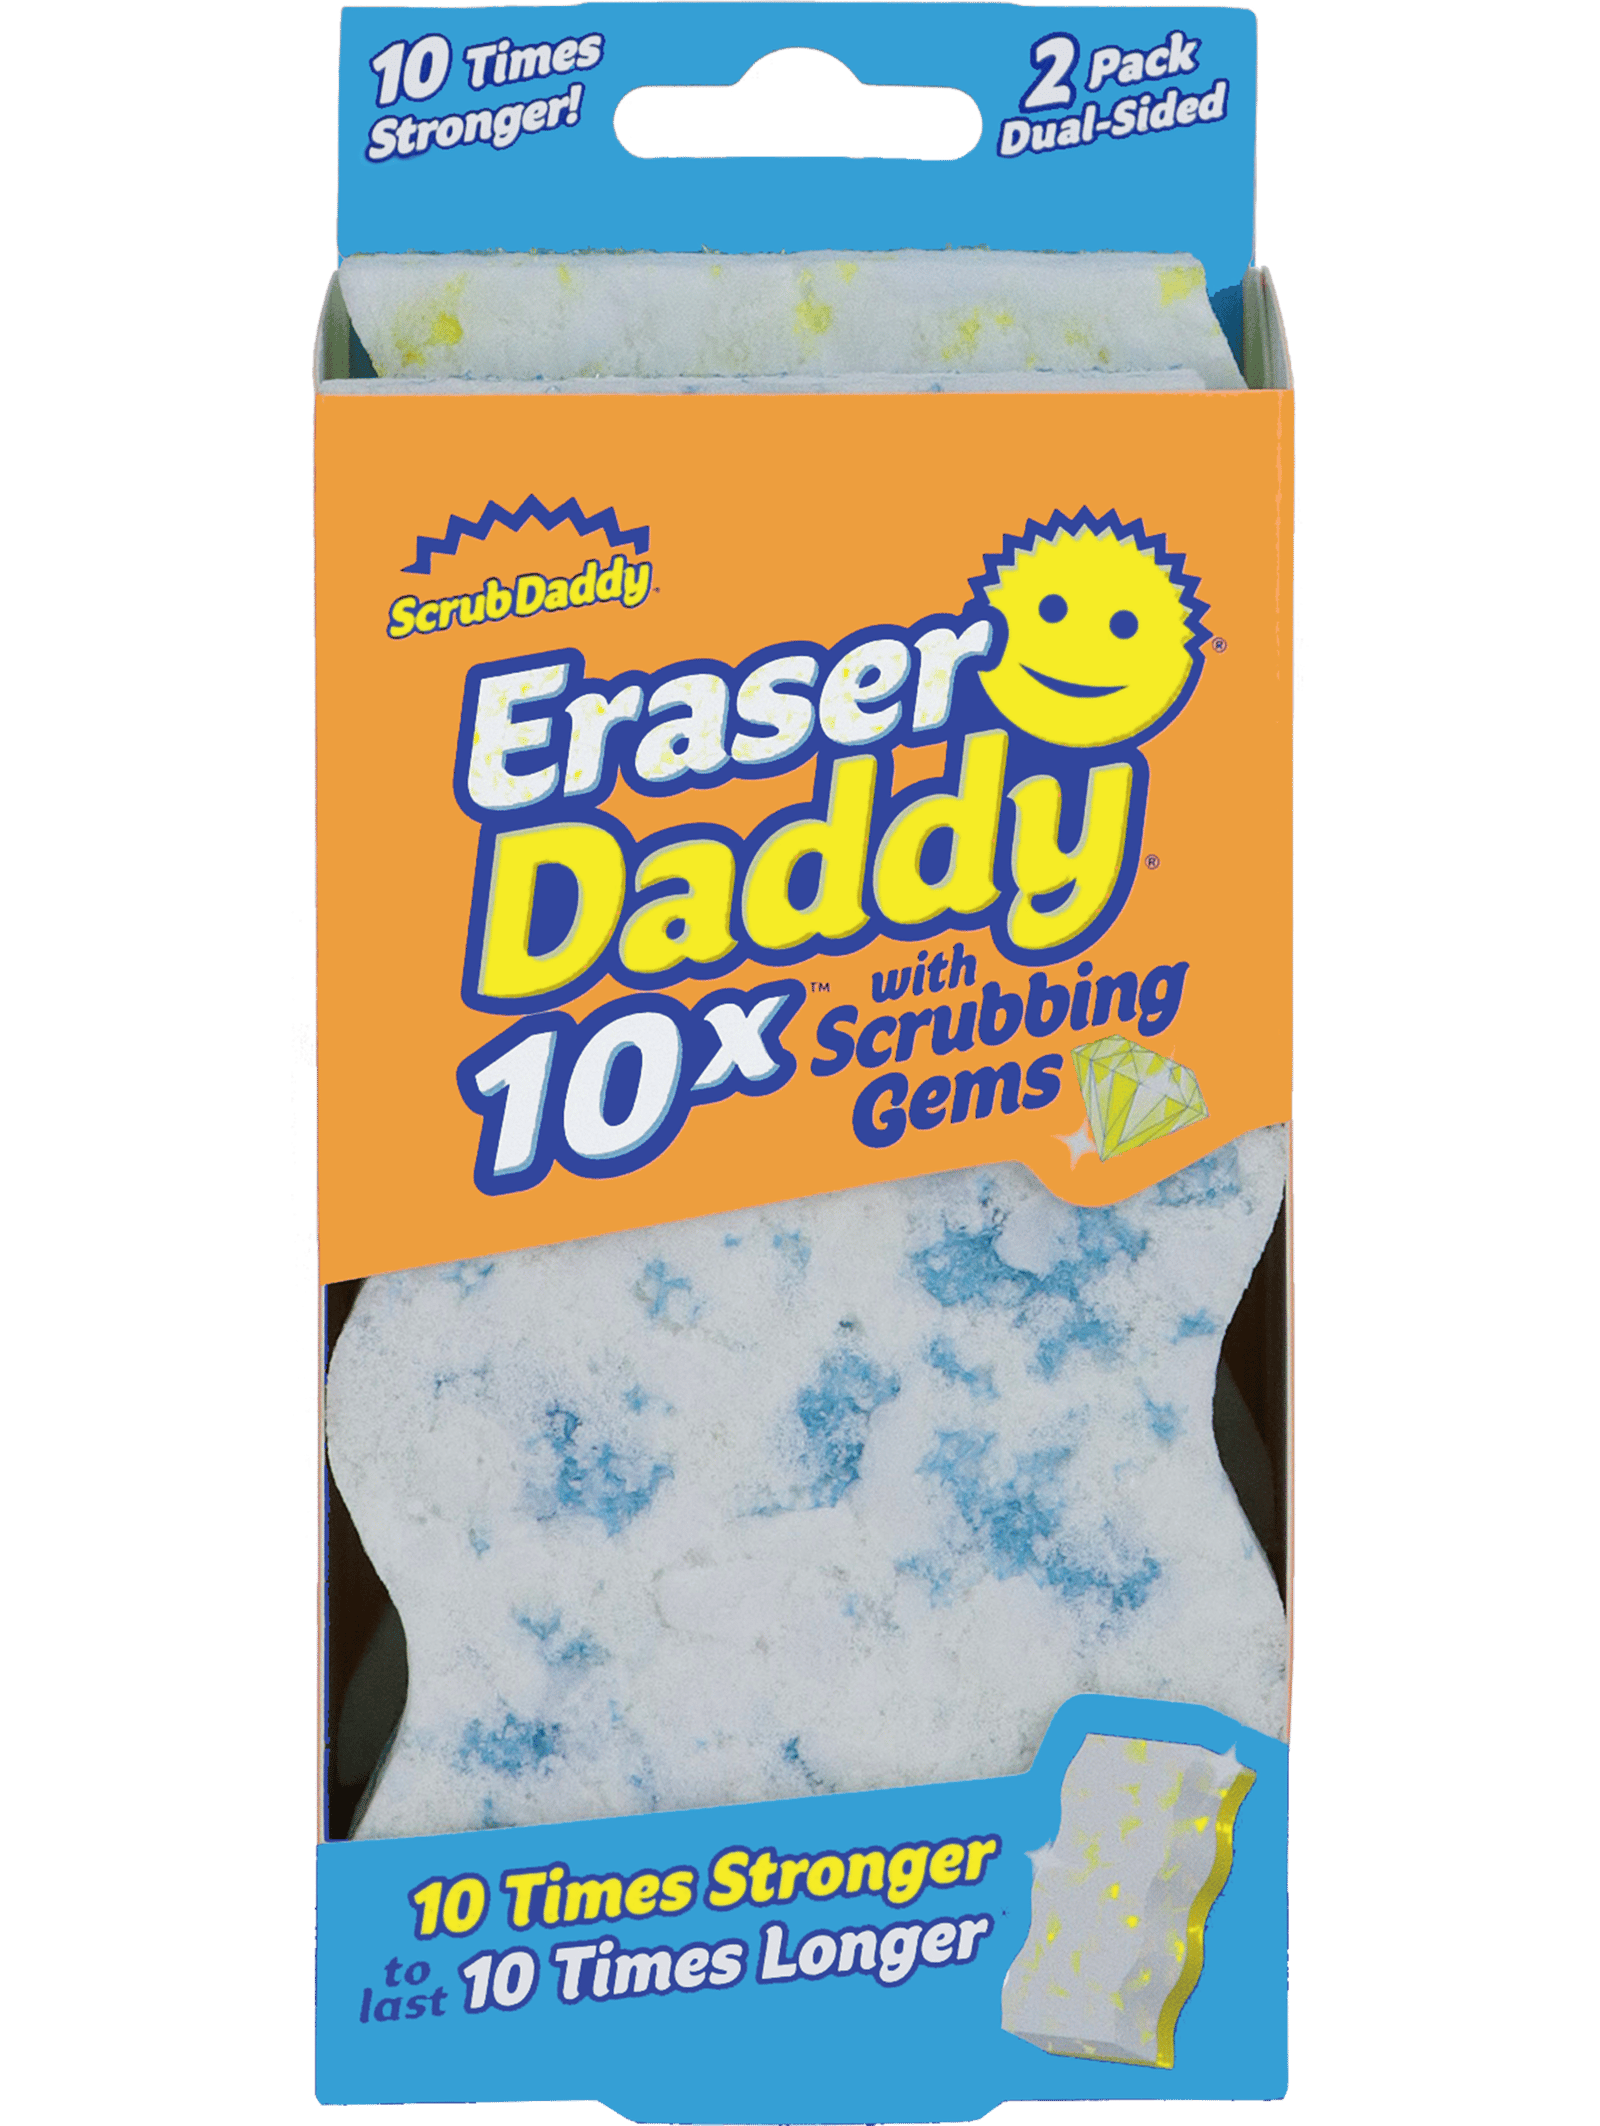 Scrub Daddy Eraser Daddy 2-pack